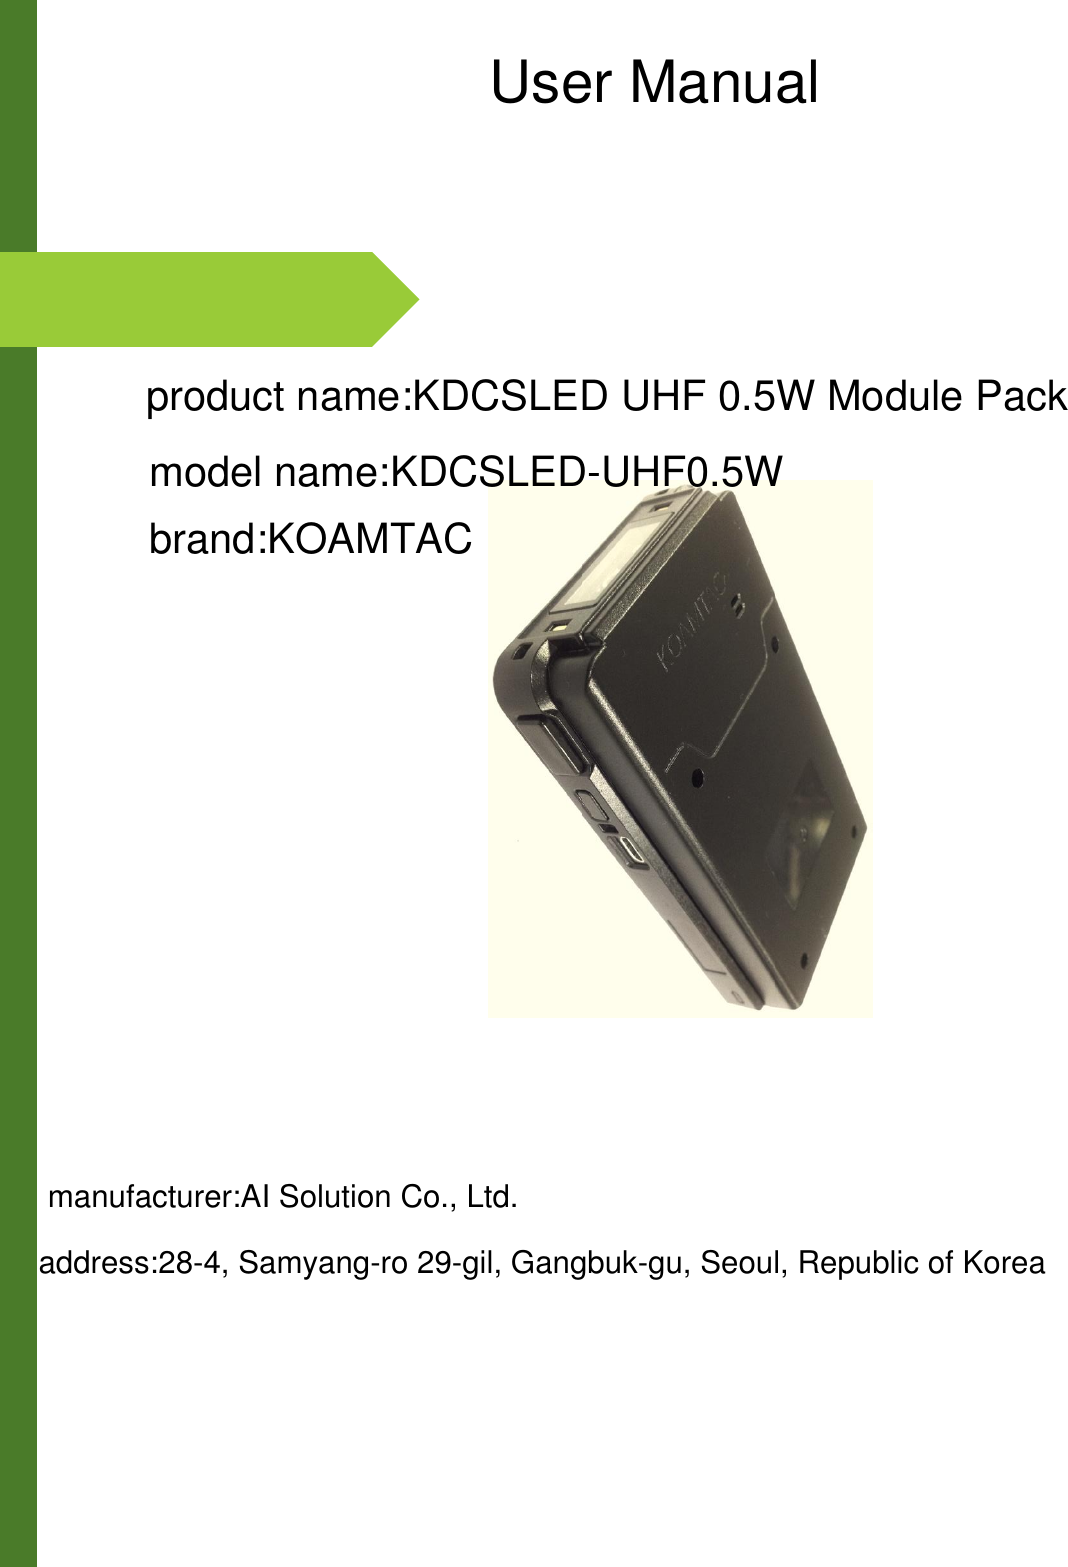                                                                                                   User Manualproduct name:KDCSLED UHF 0.5W Module Packmodel name:KDCSLED-UHF0.5Wbrand:KOAMTACmanufacturer:AI Solution Co., Ltd.address:28-4, Samyang-ro 29-gil, Gangbuk-gu, Seoul, Republic of Korea